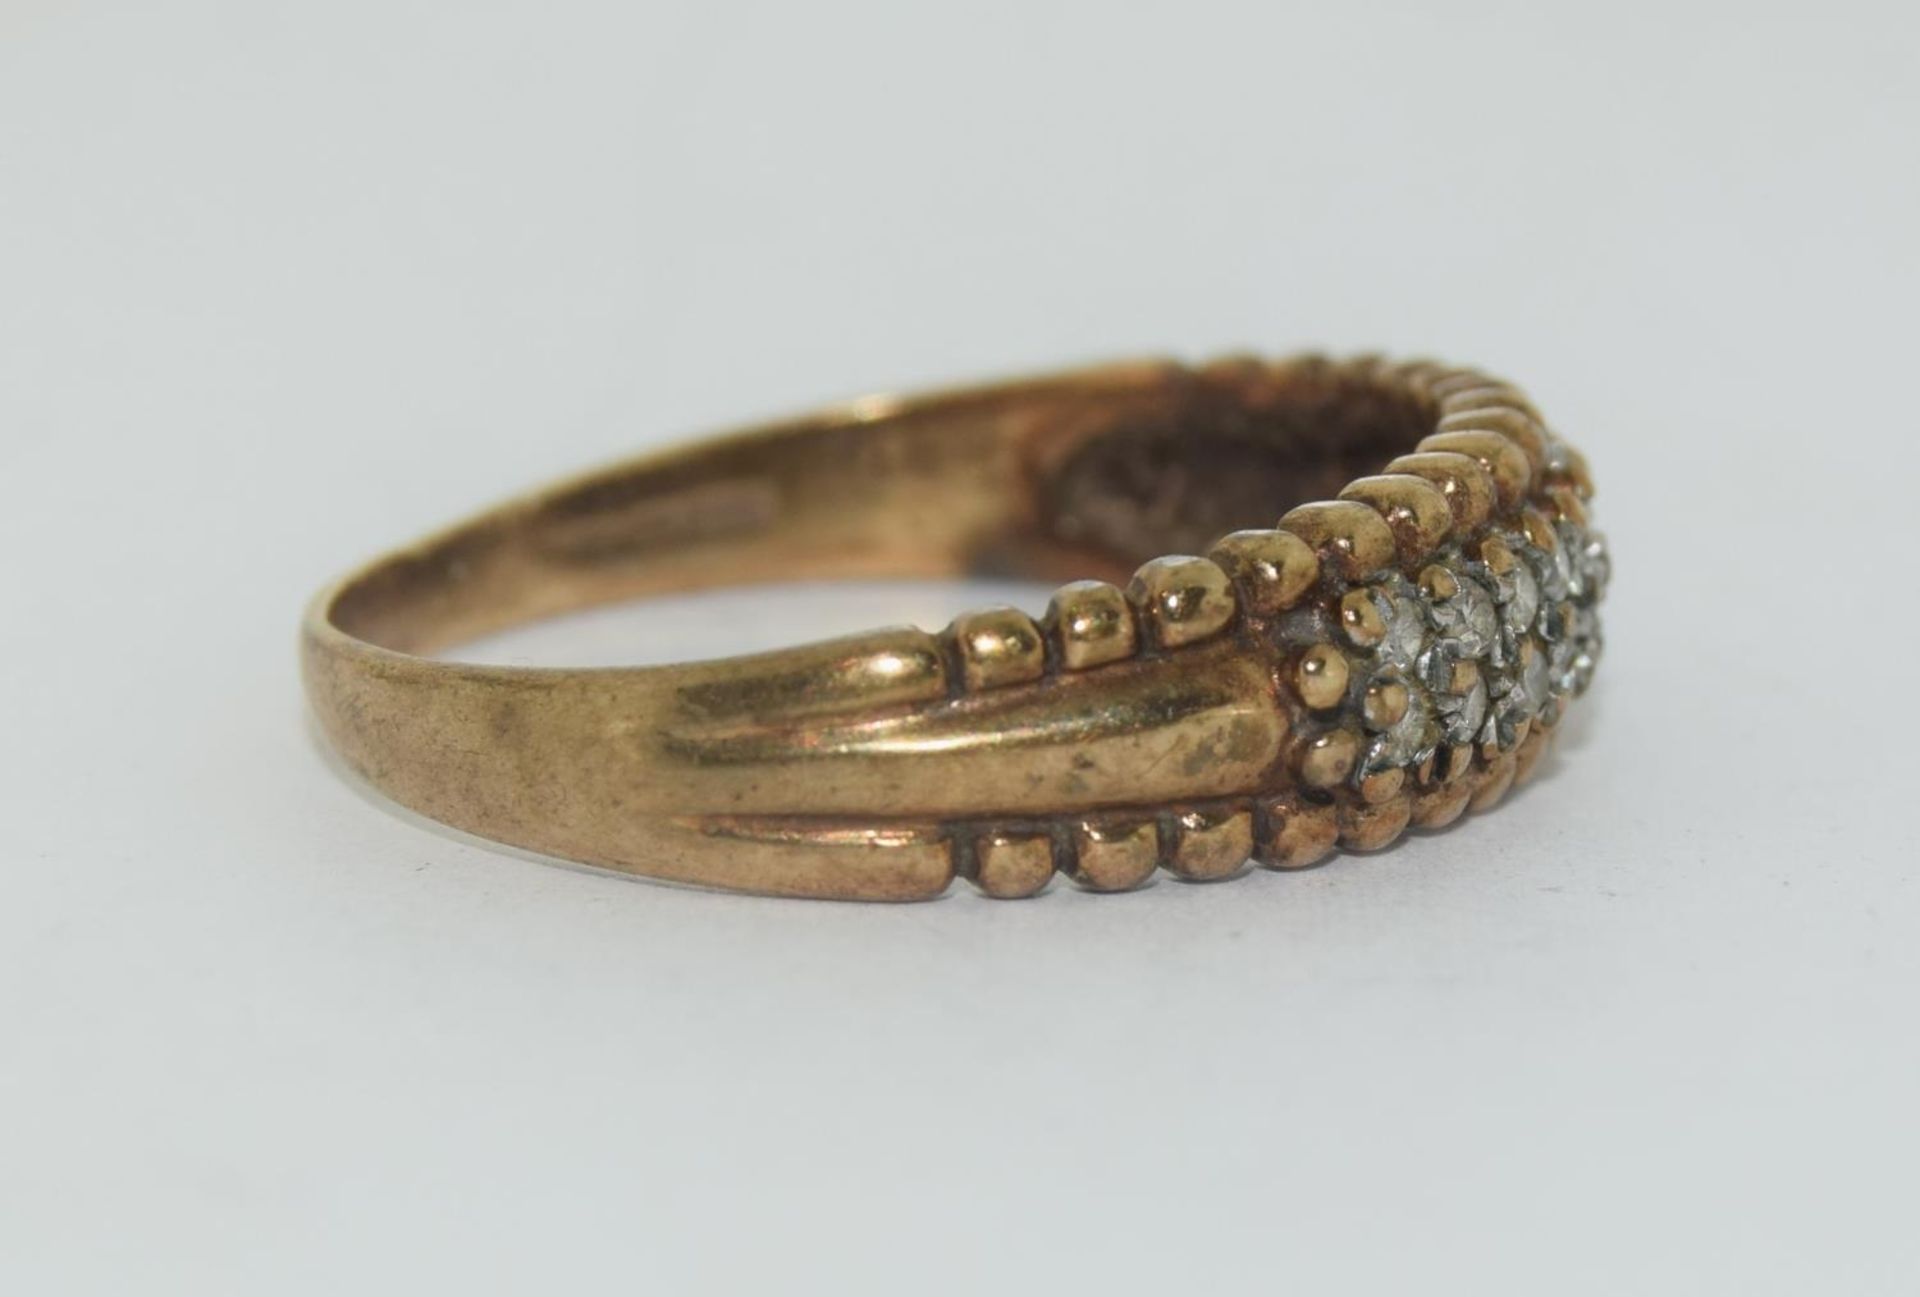 9ct gold ladies diamond bar ring size R - Image 2 of 5